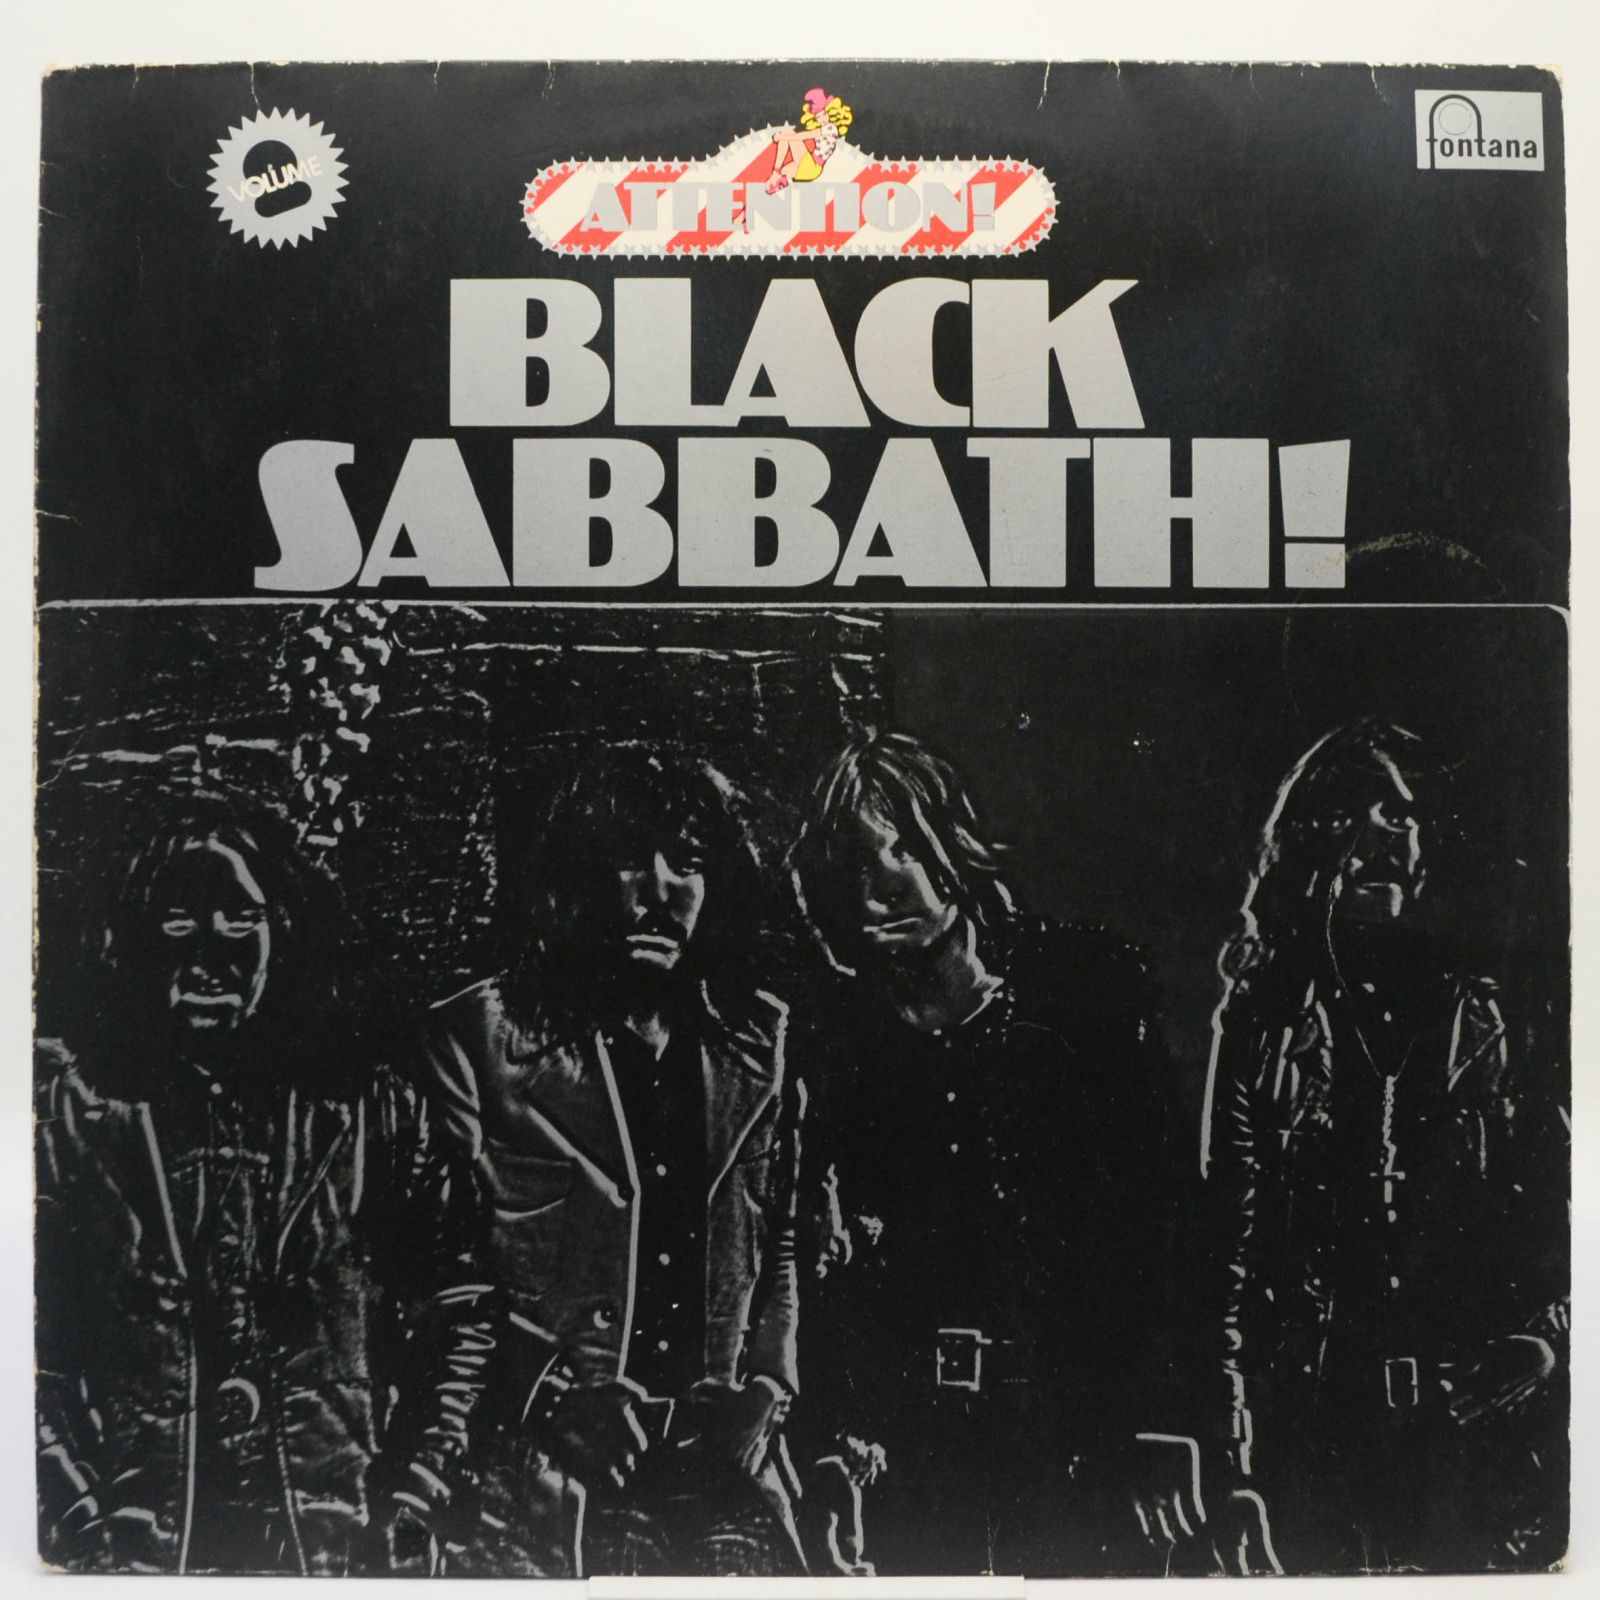 Black Sabbath — Attention! Black Sabbath Vol. 2, 1974